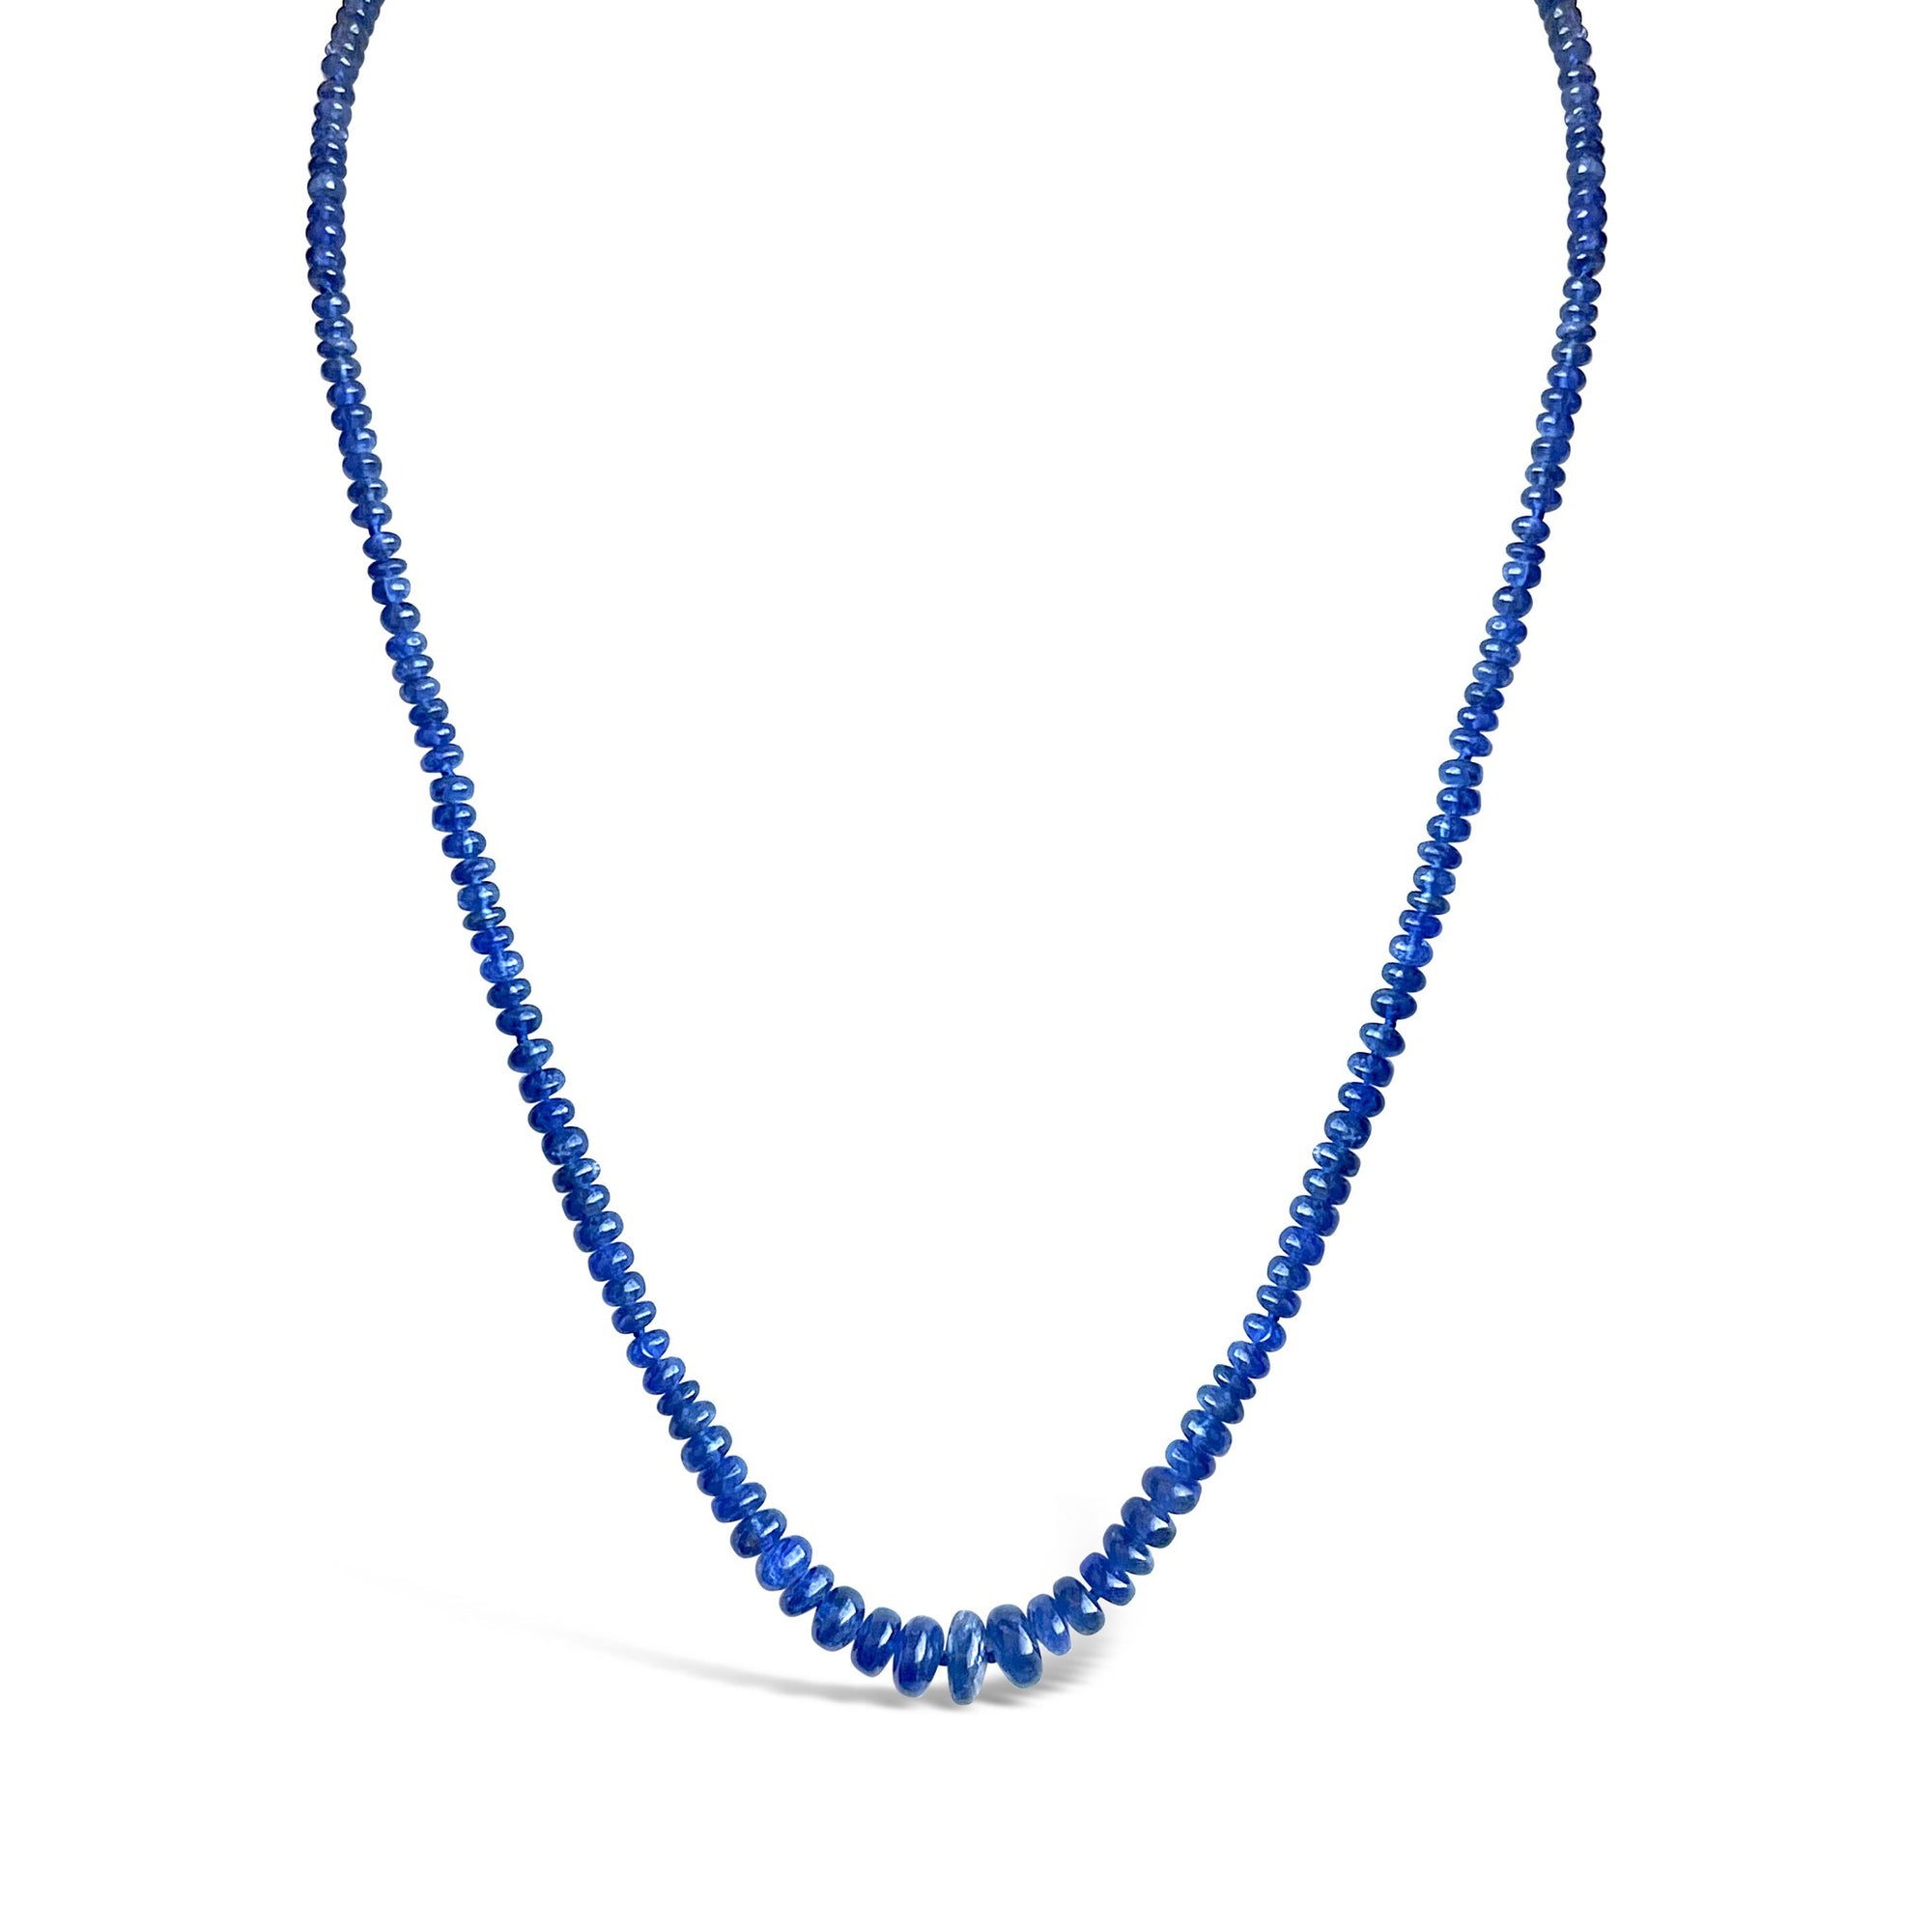 Astrological Gem Blue Sapphire Beaded Necklace for Saturn